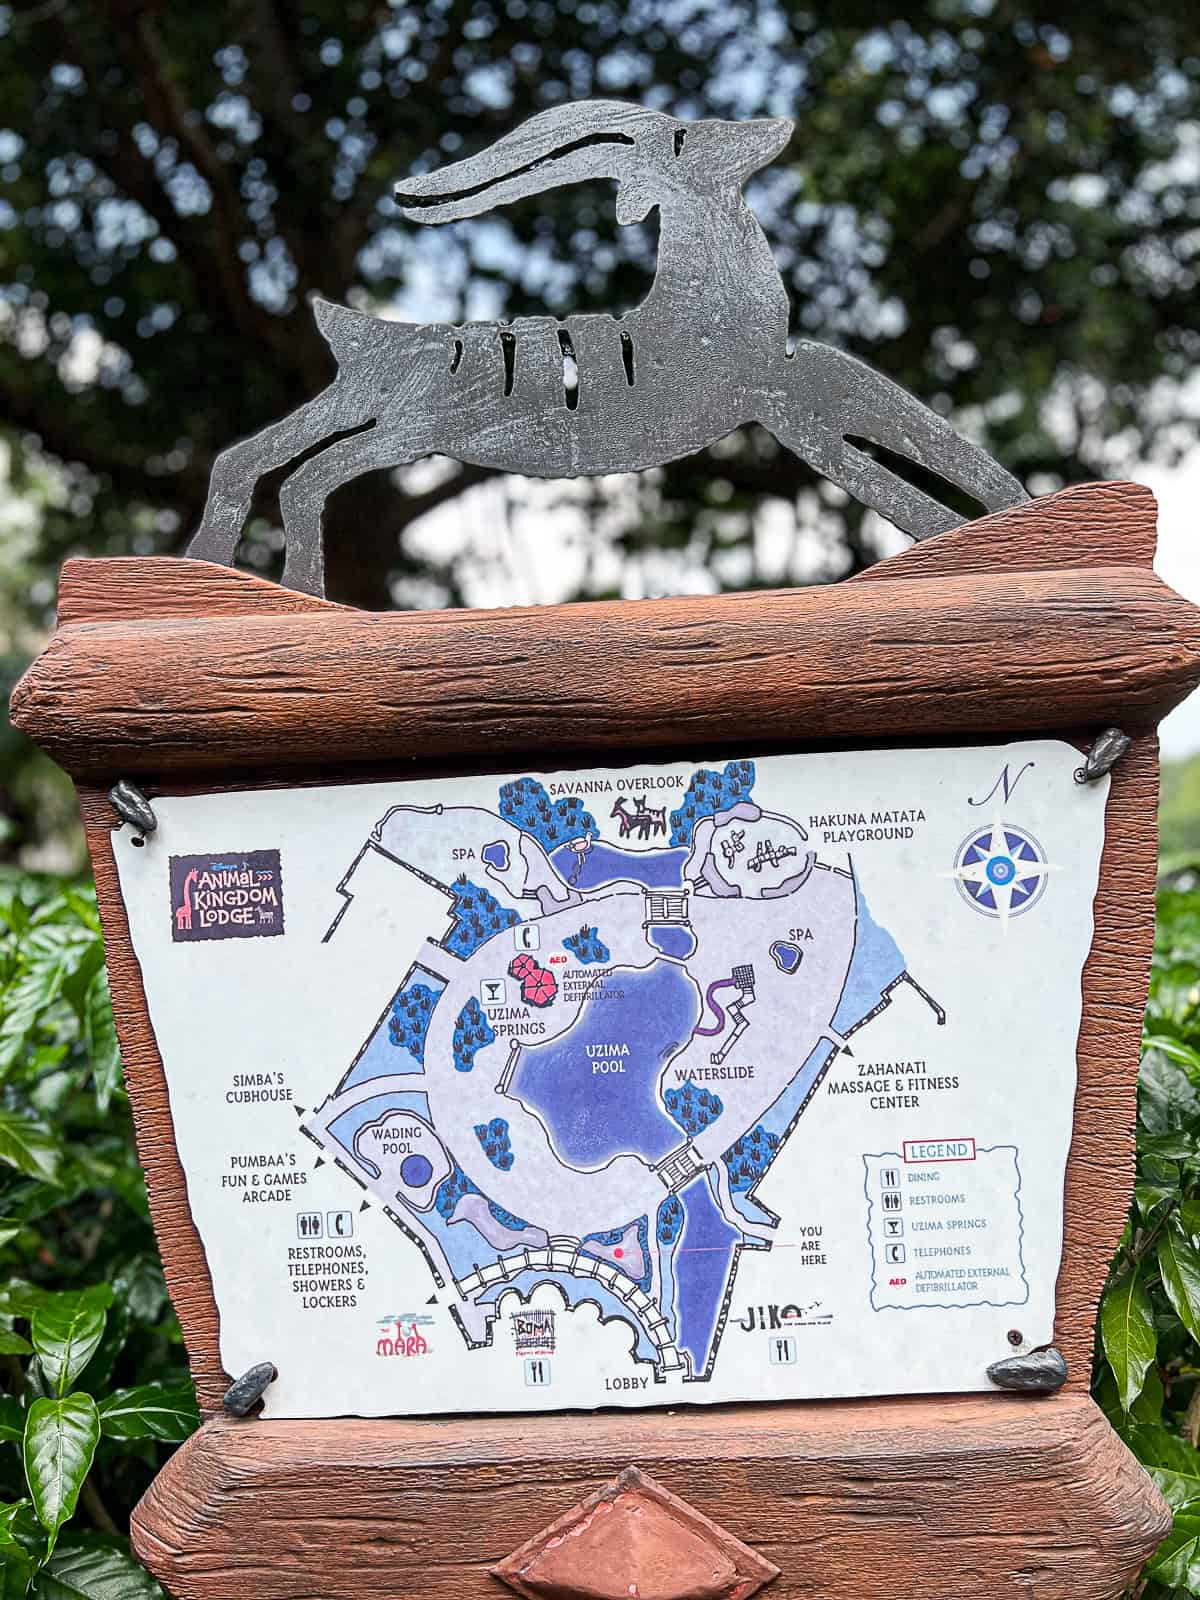 Animal Kingdom Jambo House Map depicting Hakuna Matata Playground location